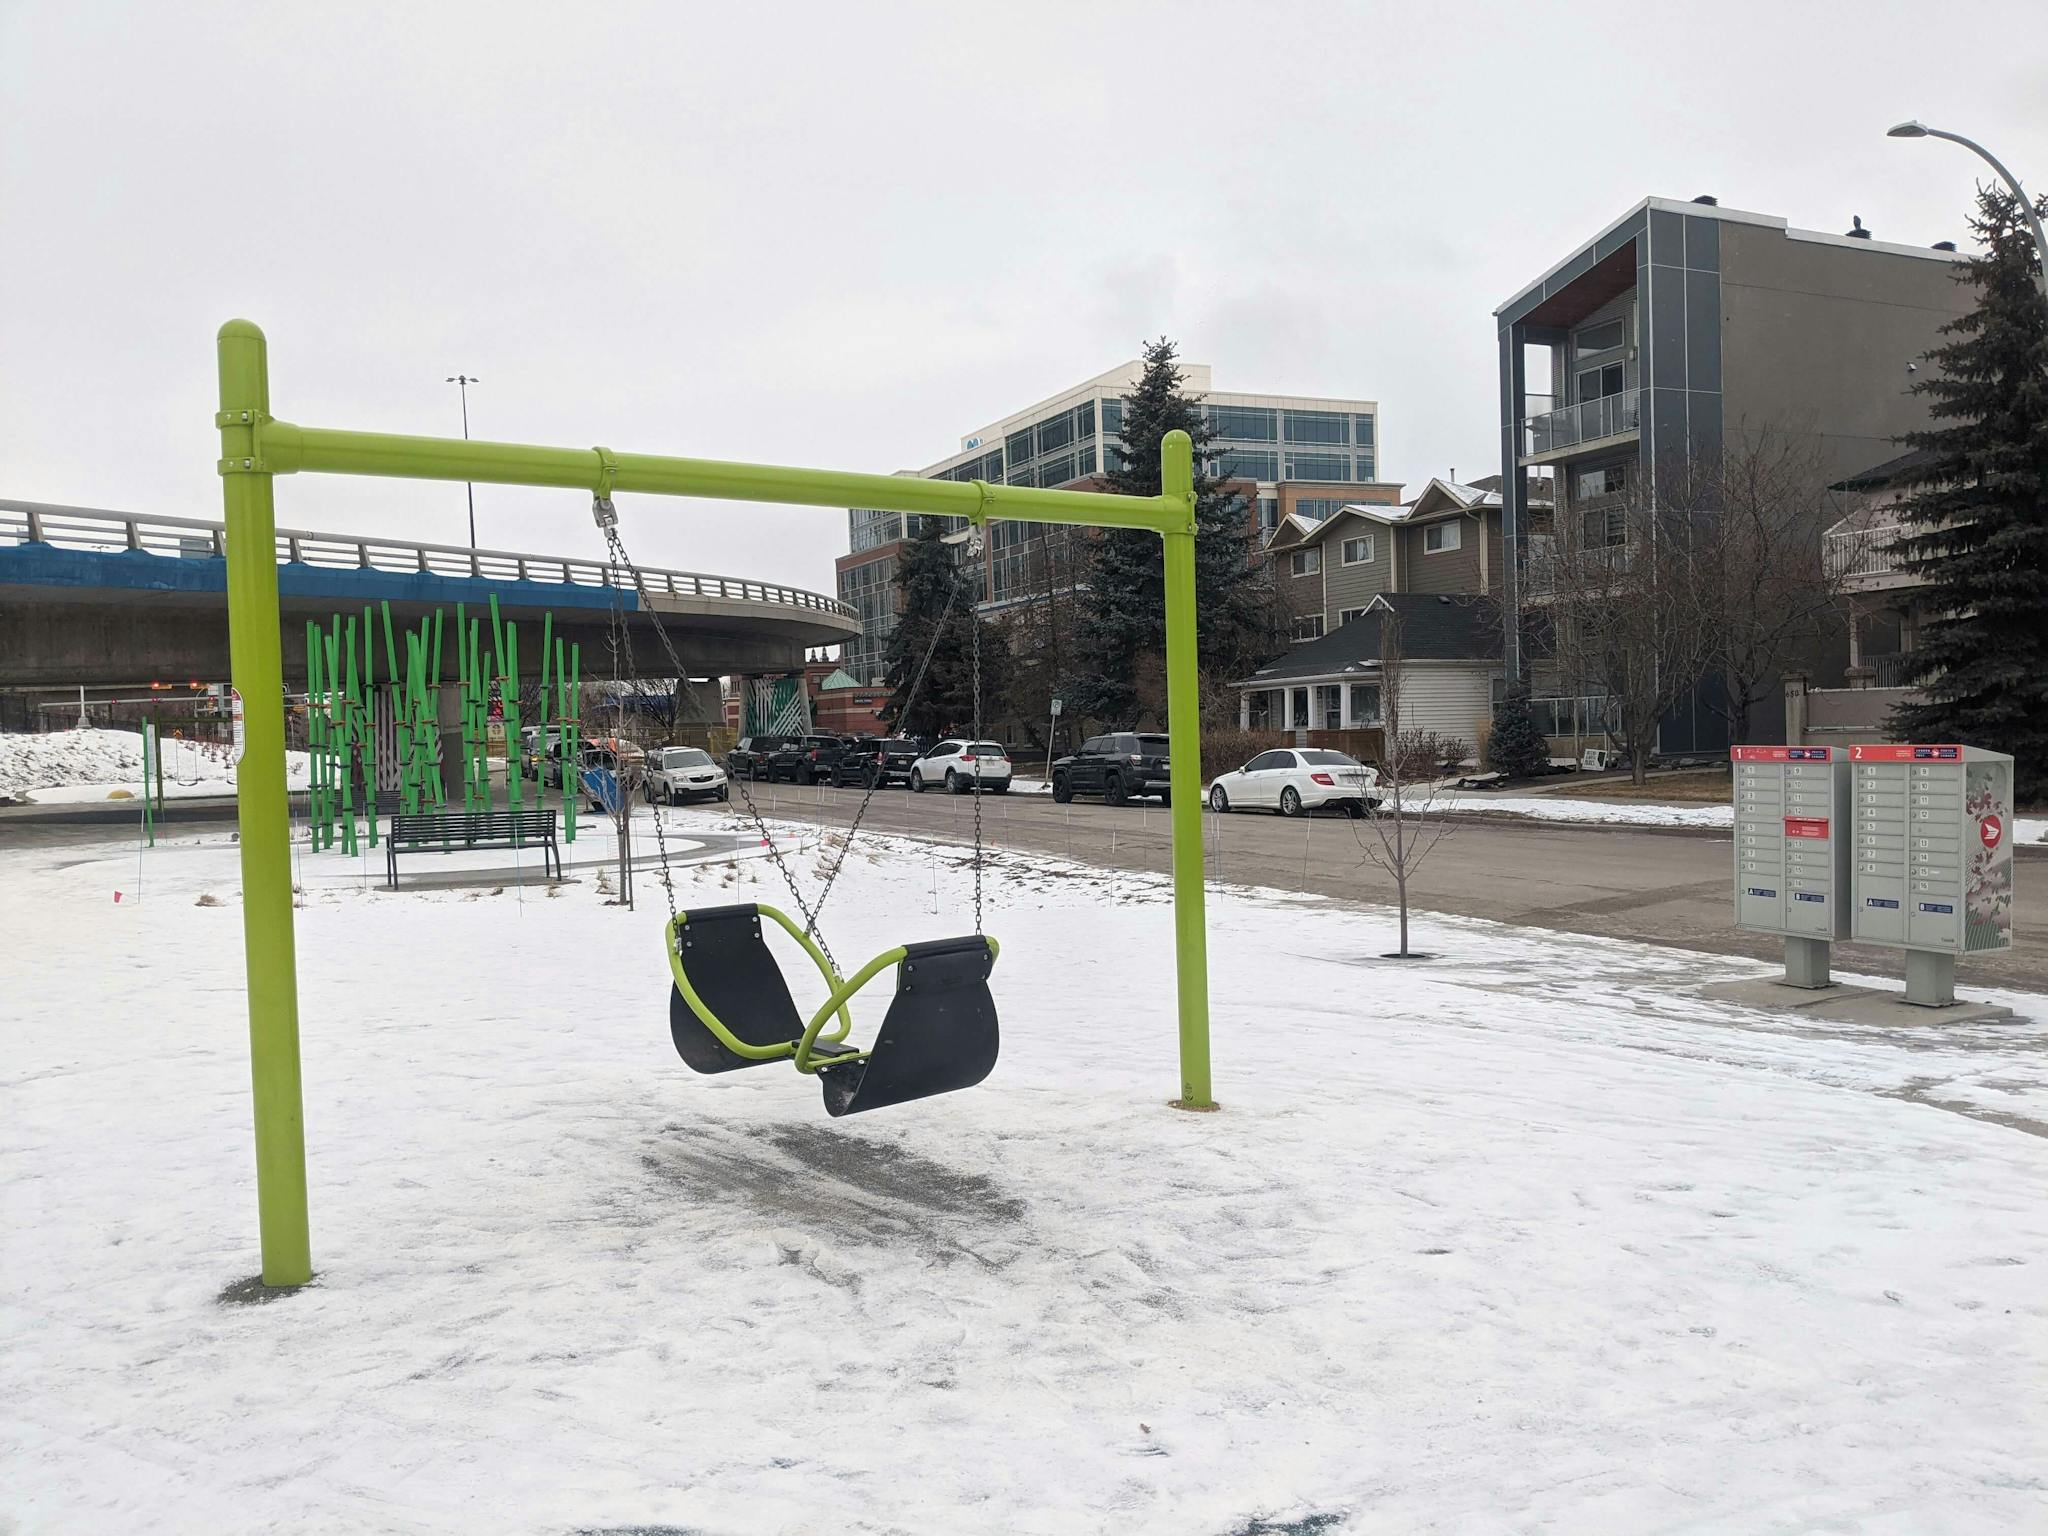 An empty swing in a park off Memorial